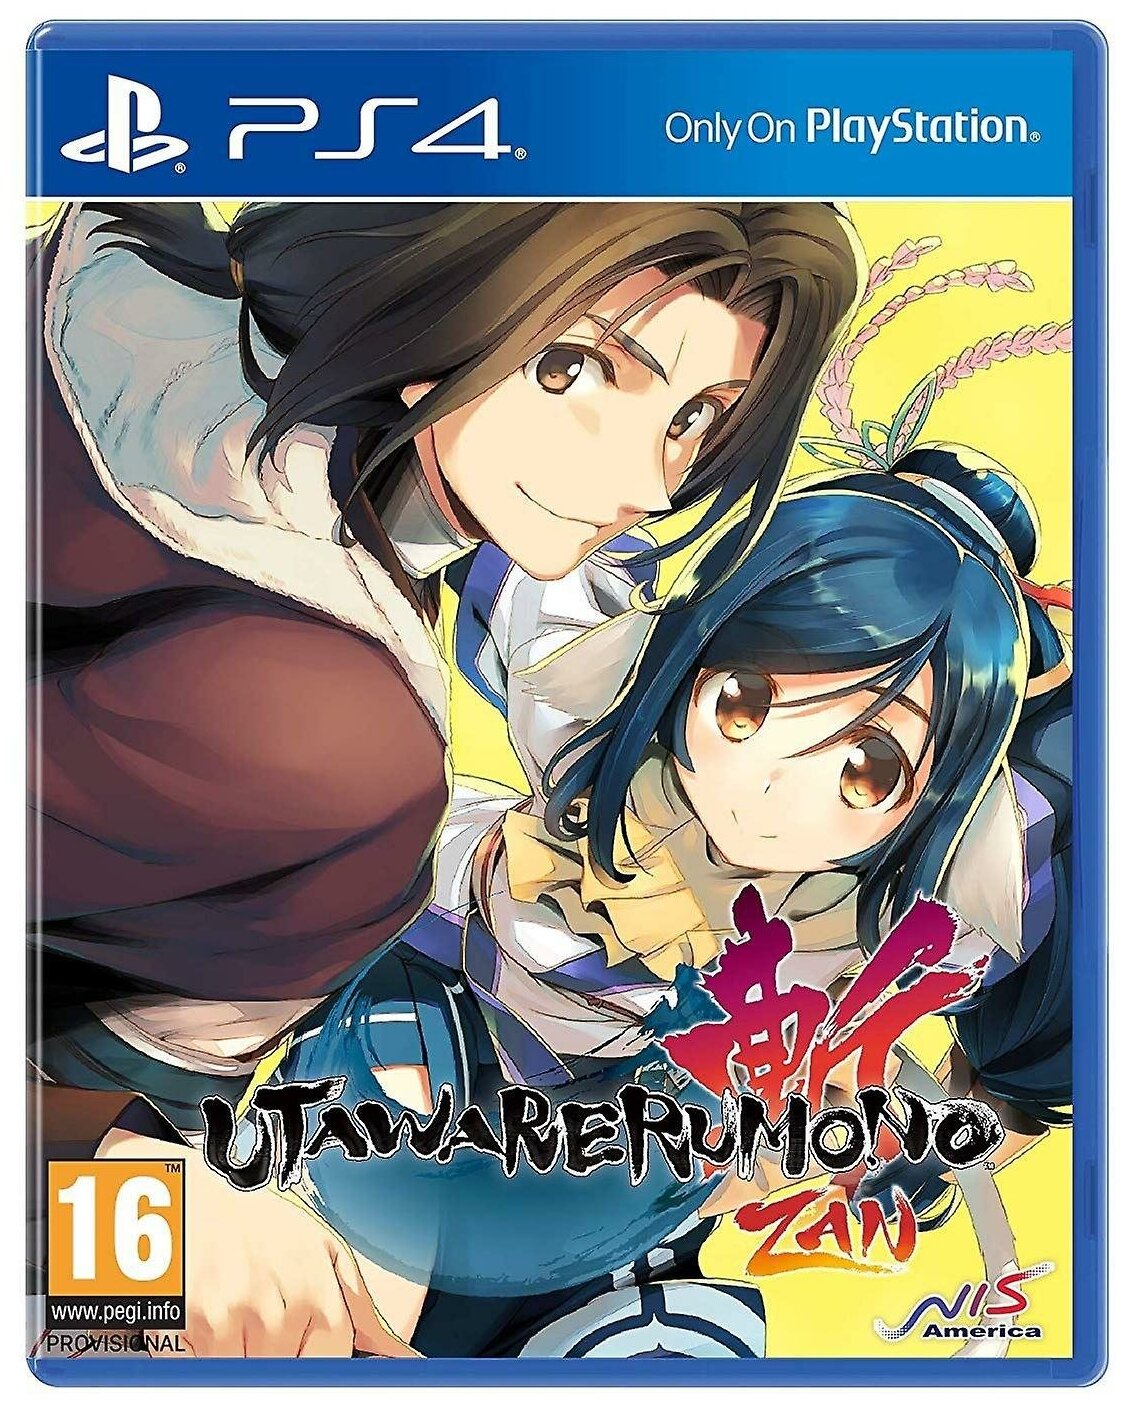 Utawarerumono: ZAN (PS4) английский язык